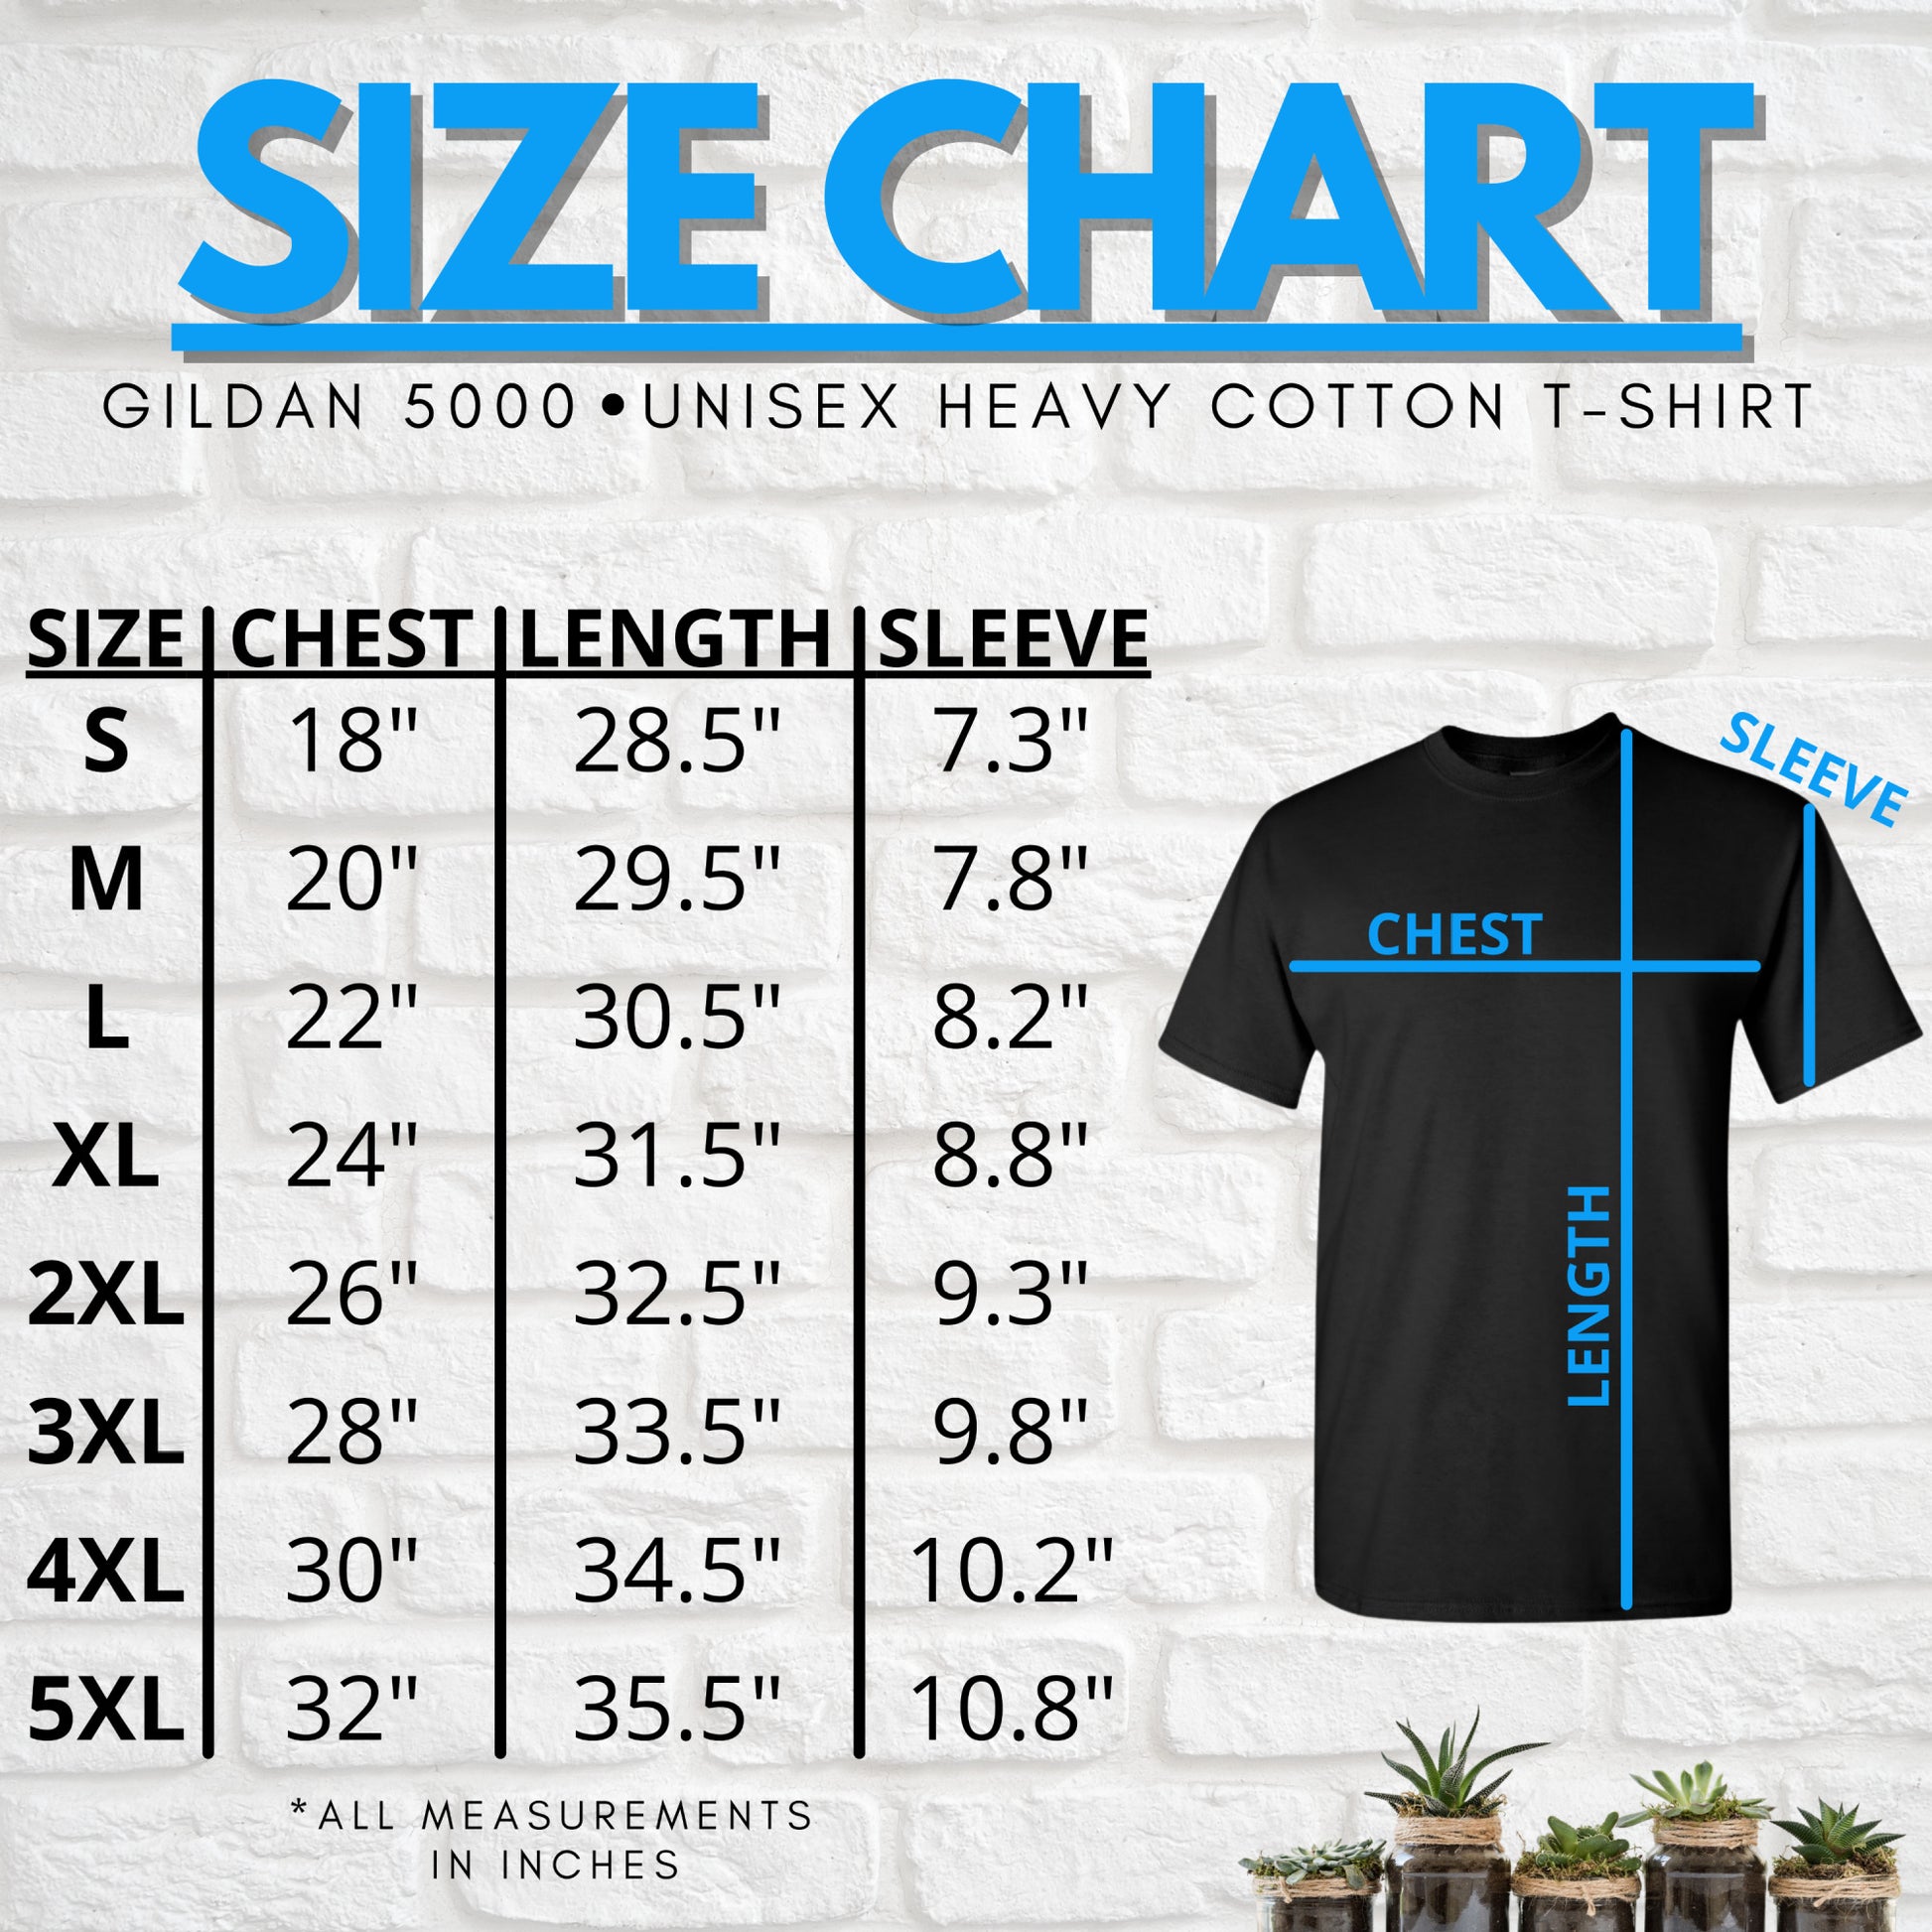 Size chart for this unisex Gildan #5000 shirt